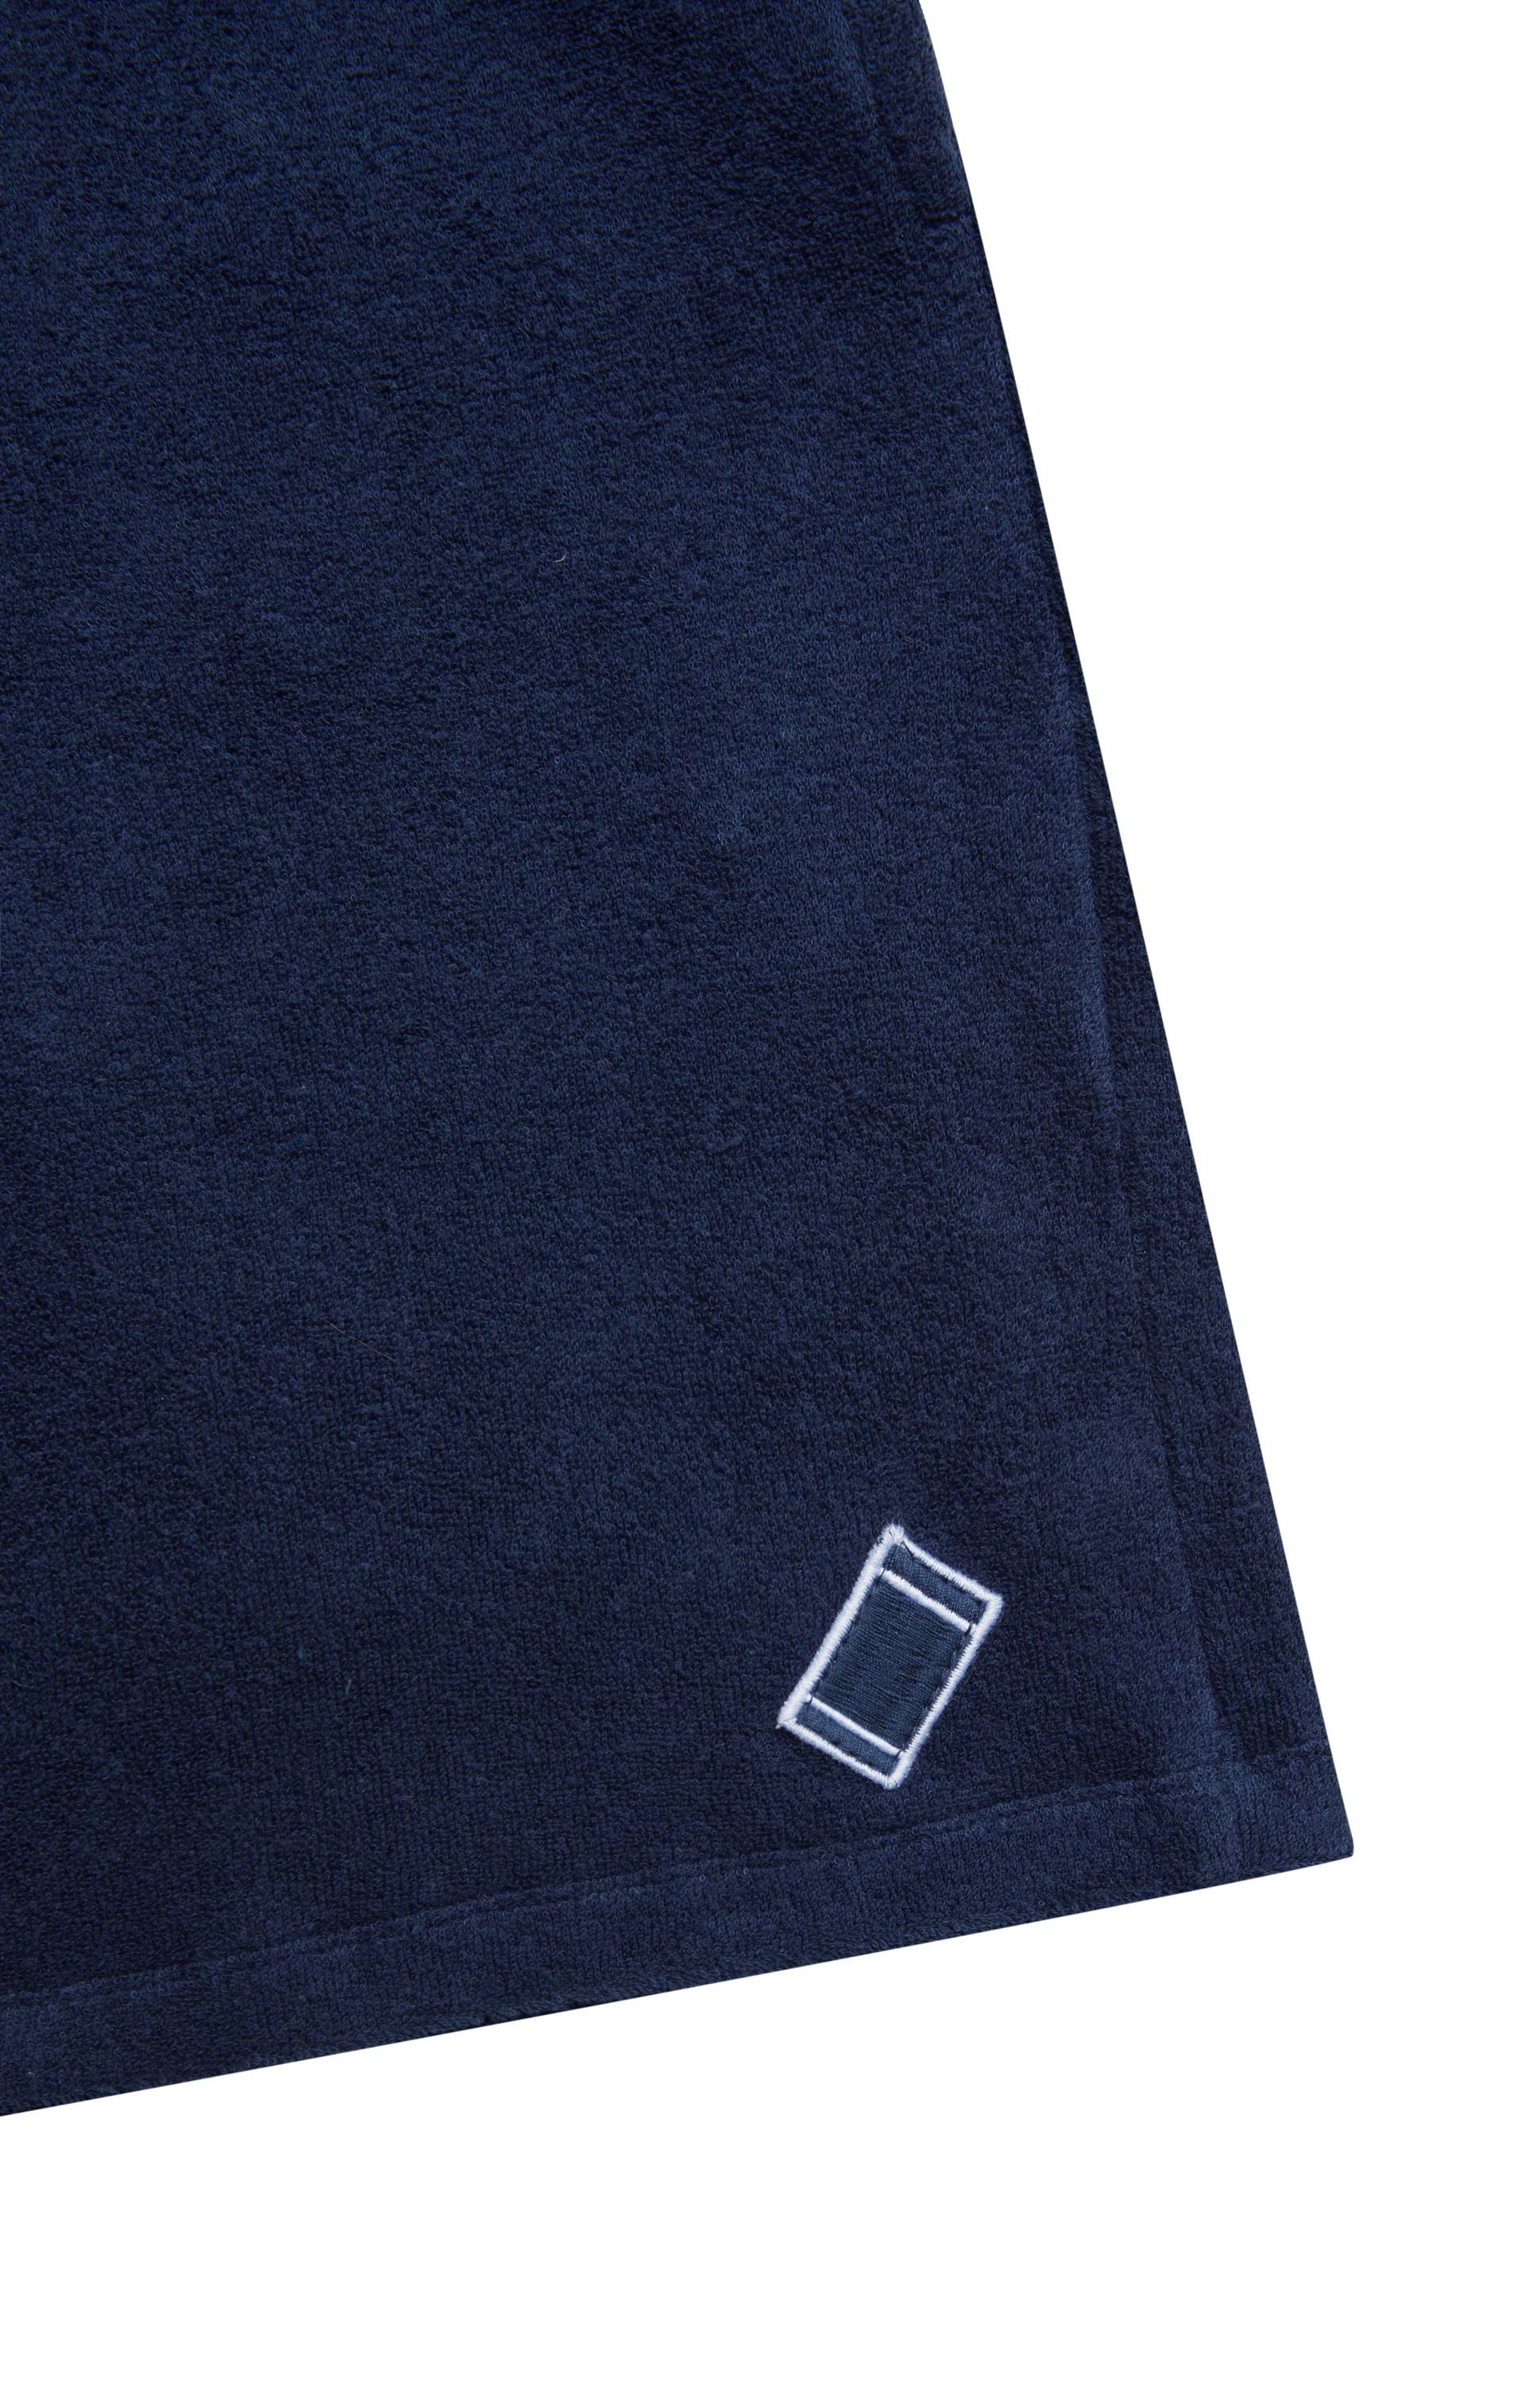 Onepiece Towel Club Shorts Navy - 4